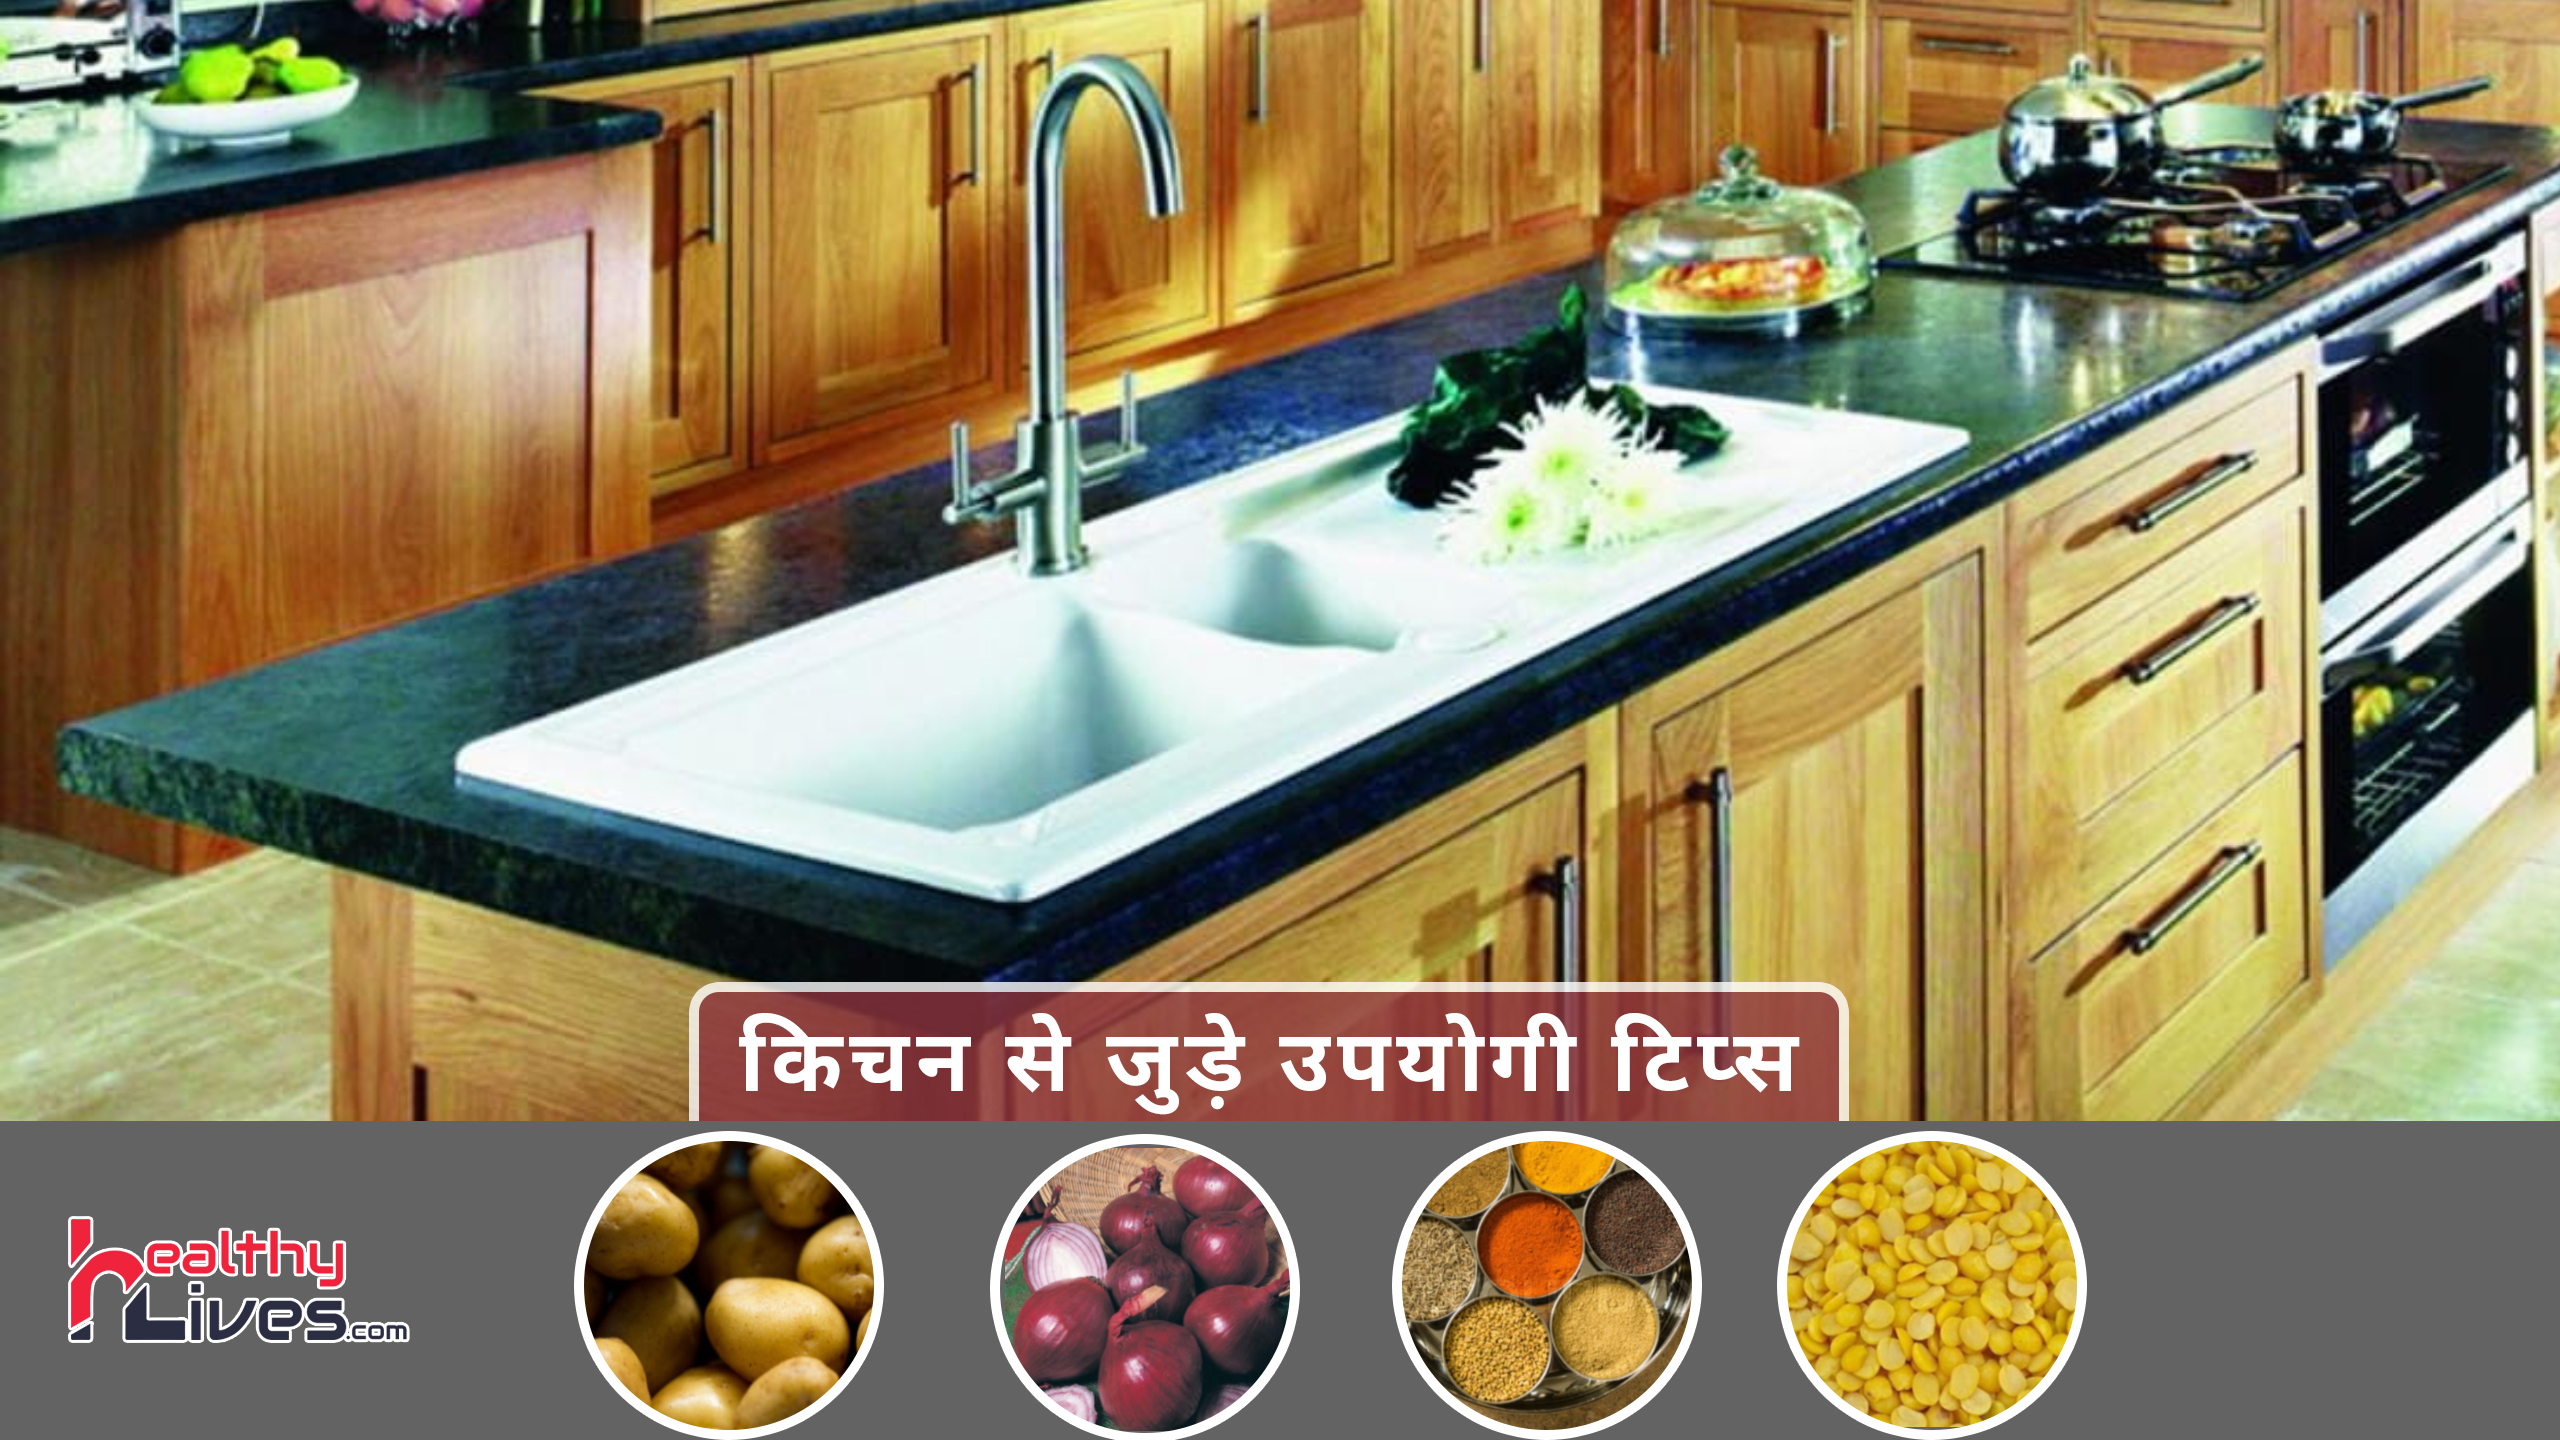 Kitchen Tips in Hindi: इन स्पेशल किचन टिप्स द्वारा बनाये अपने रसोई घर को स्वच्छ और सुन्दर